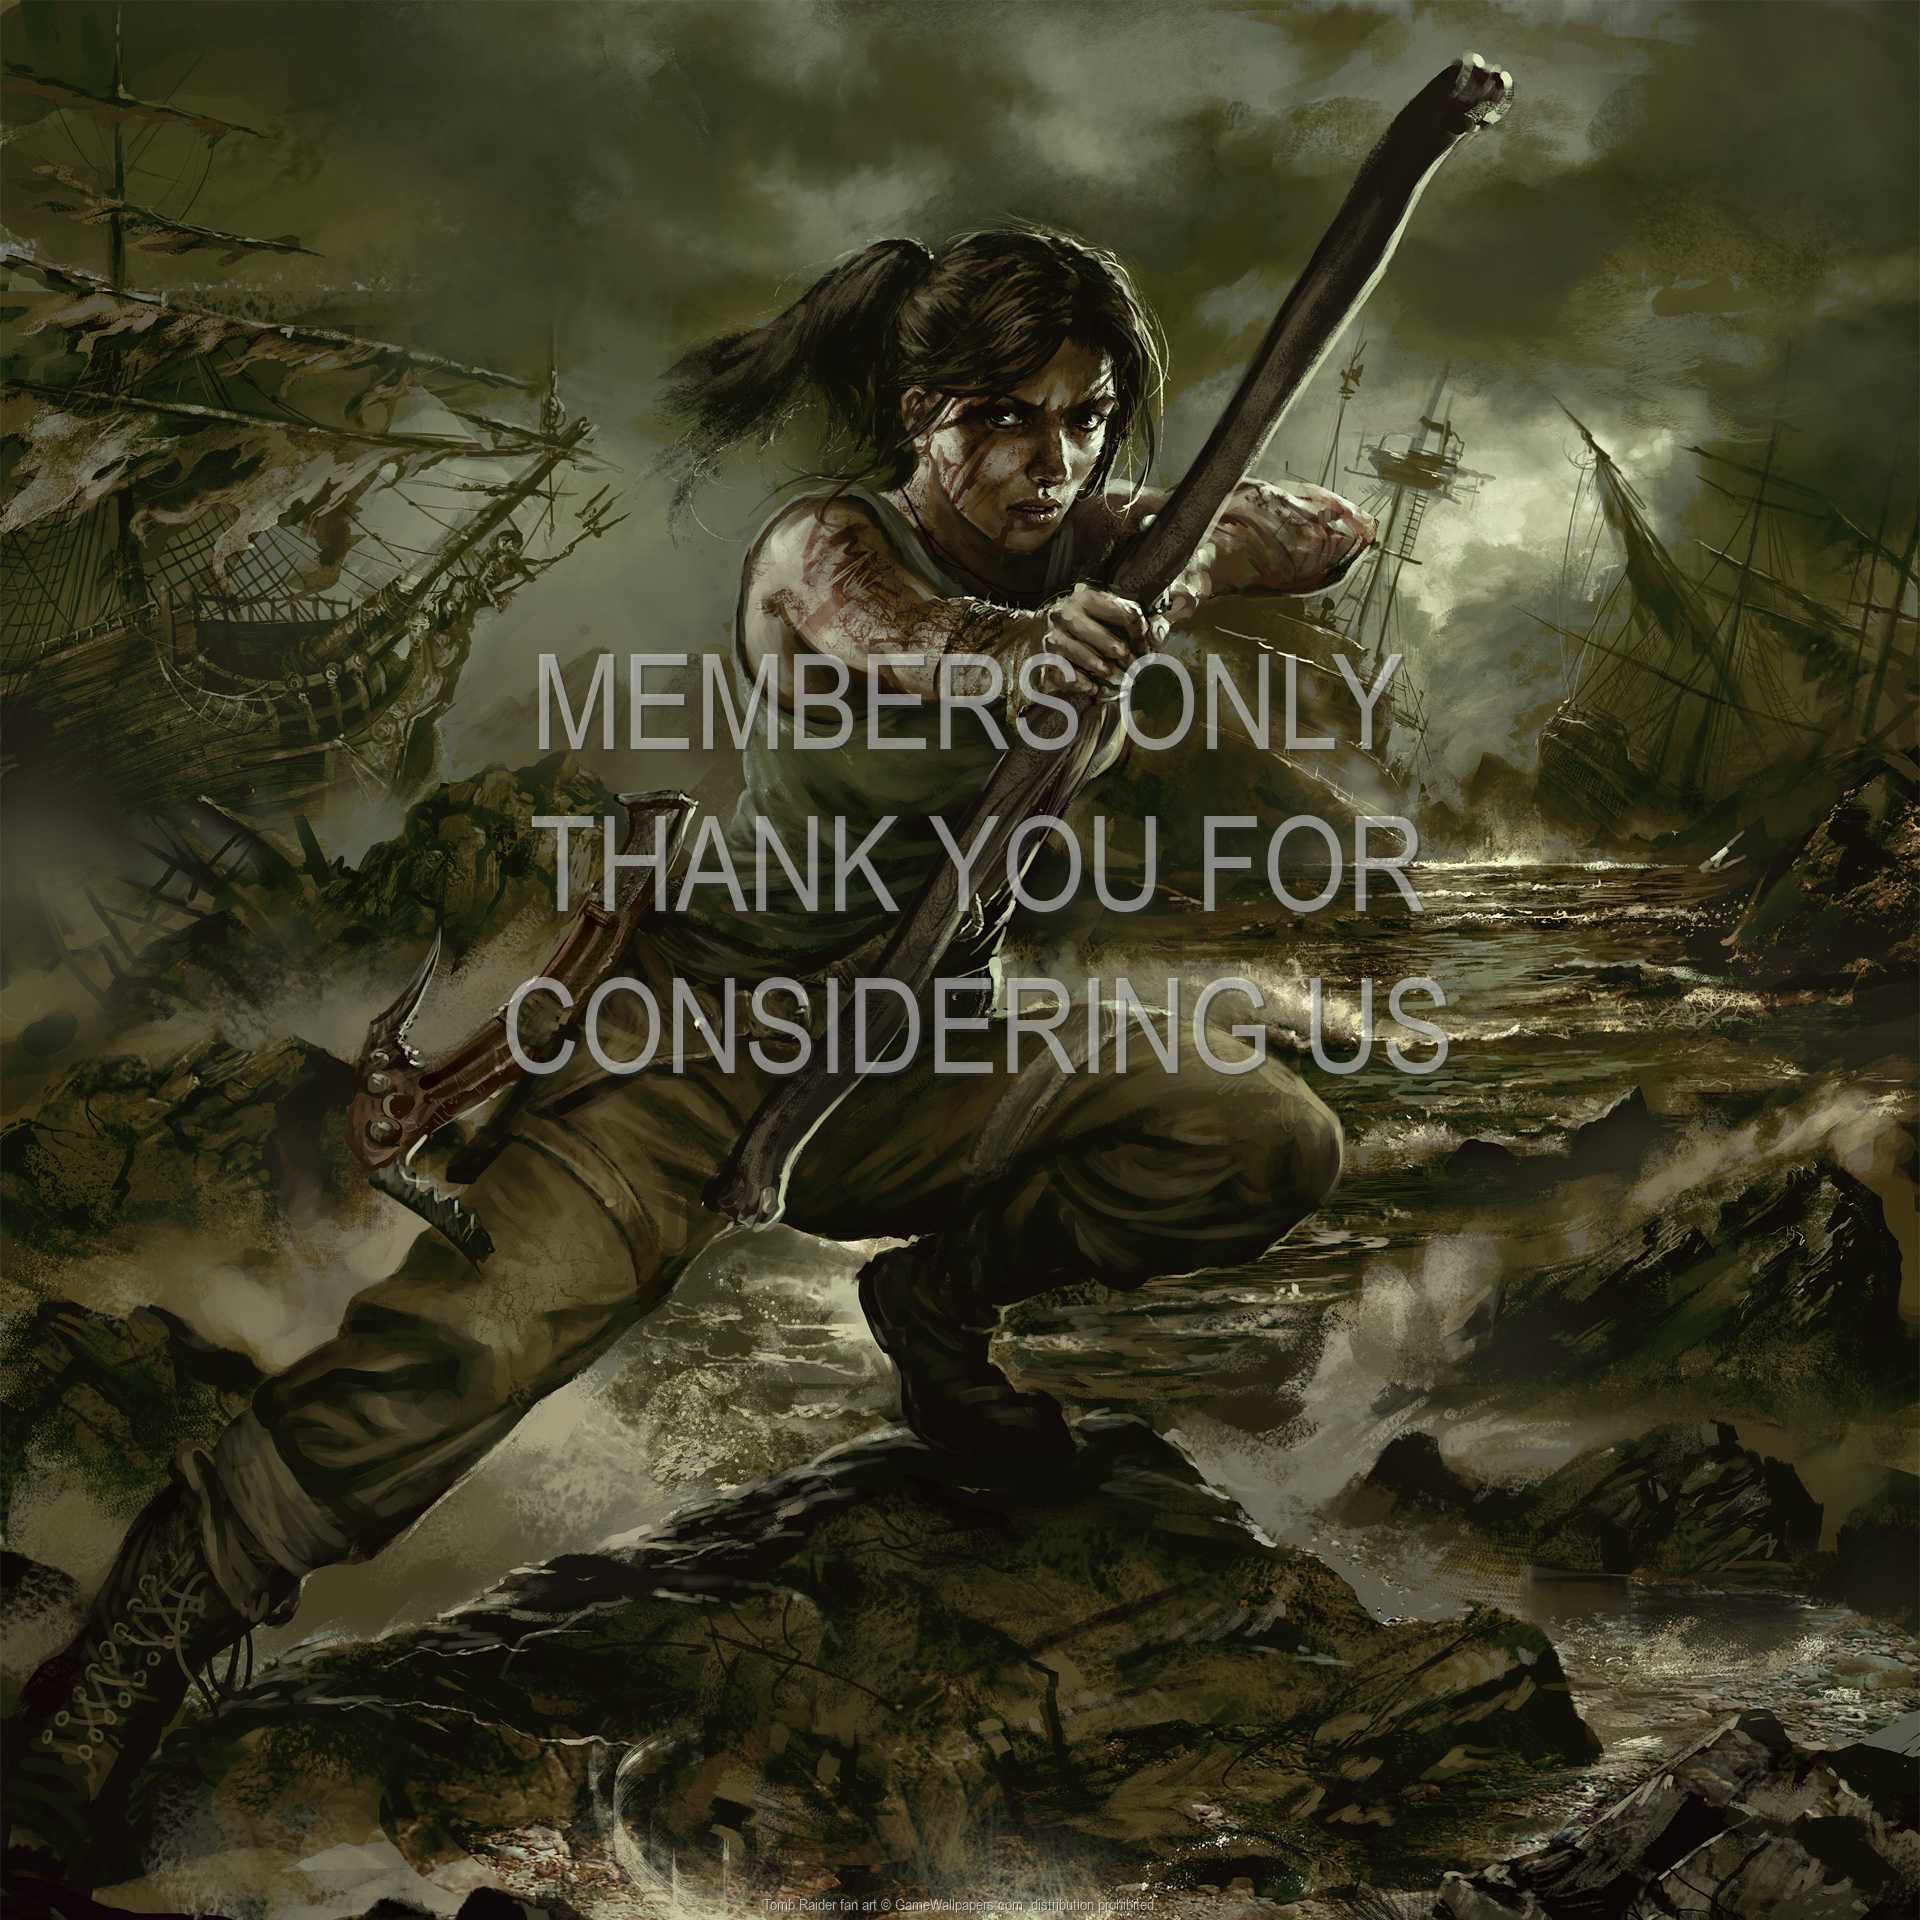 Tomb Raider fan art 1080p%20Horizontal Mobile wallpaper or background 08